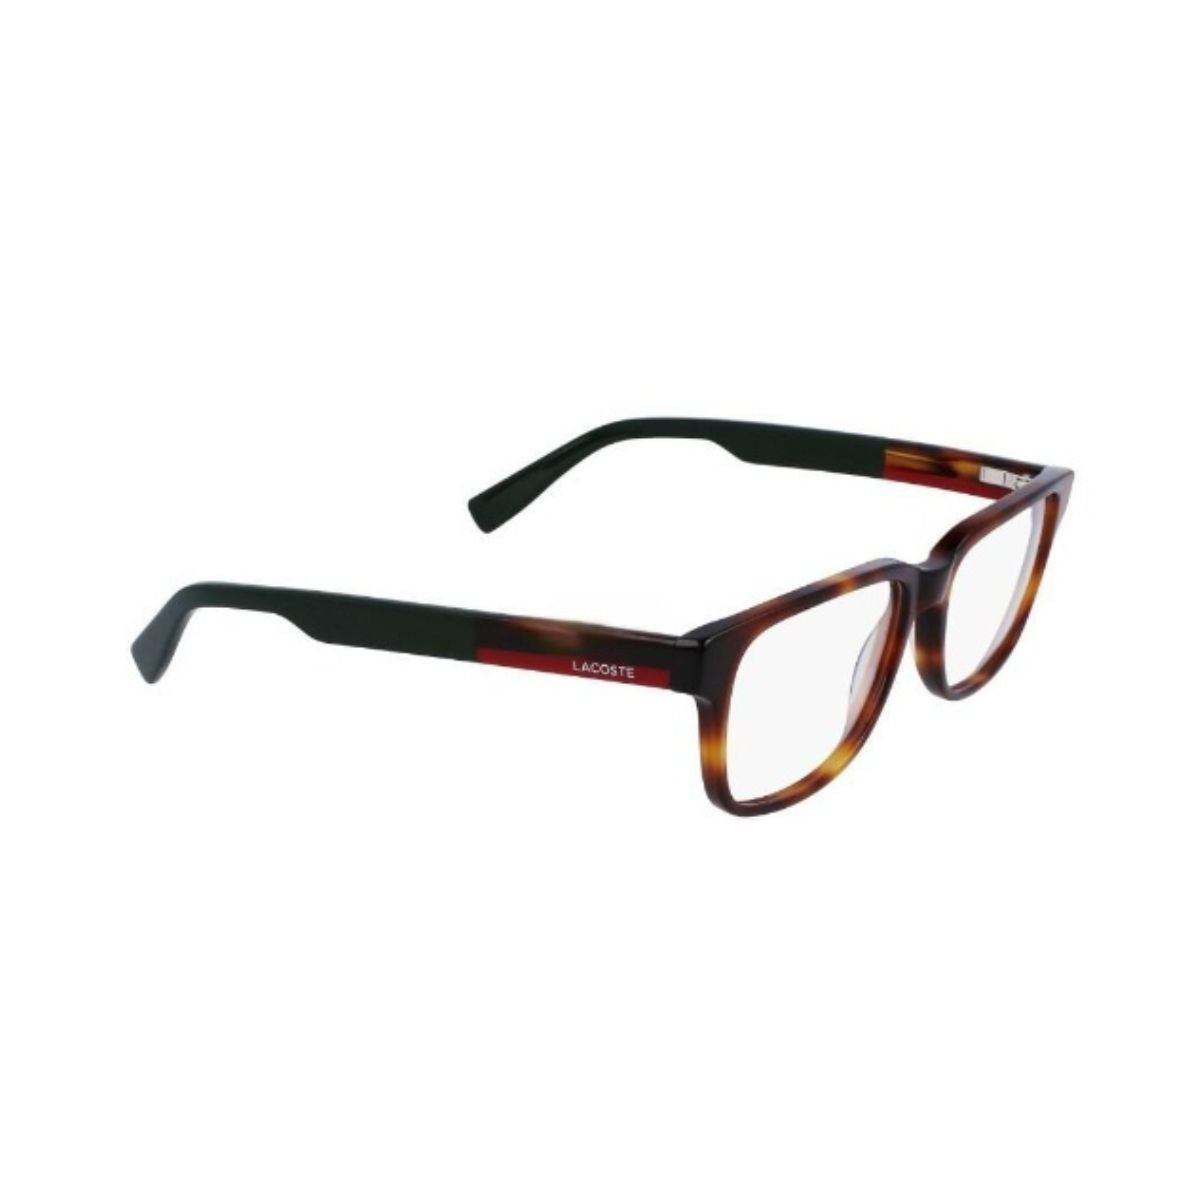 "shop Lacoste 2910 240 optical eyeglasses frame for men and women at optorium"